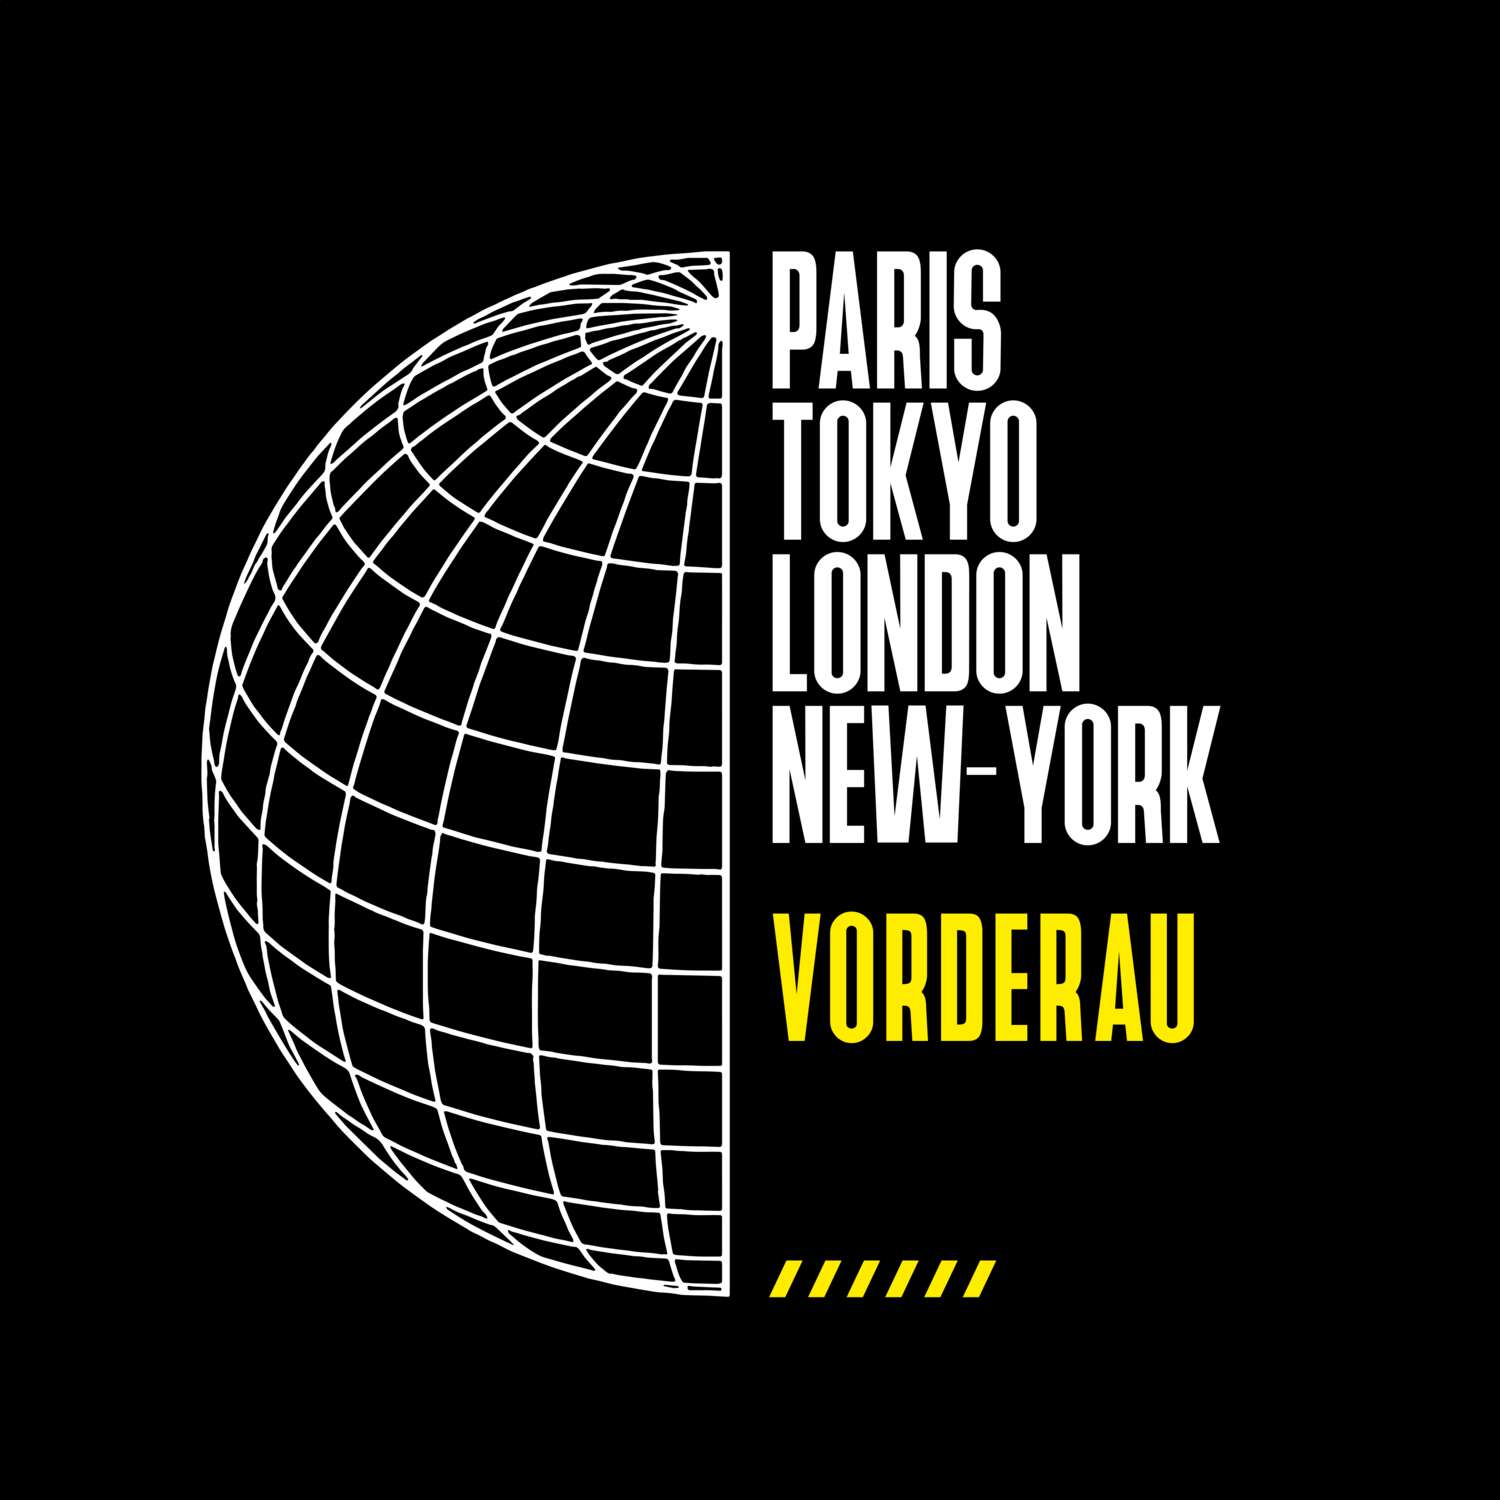 Vorderau T-Shirt »Paris Tokyo London«